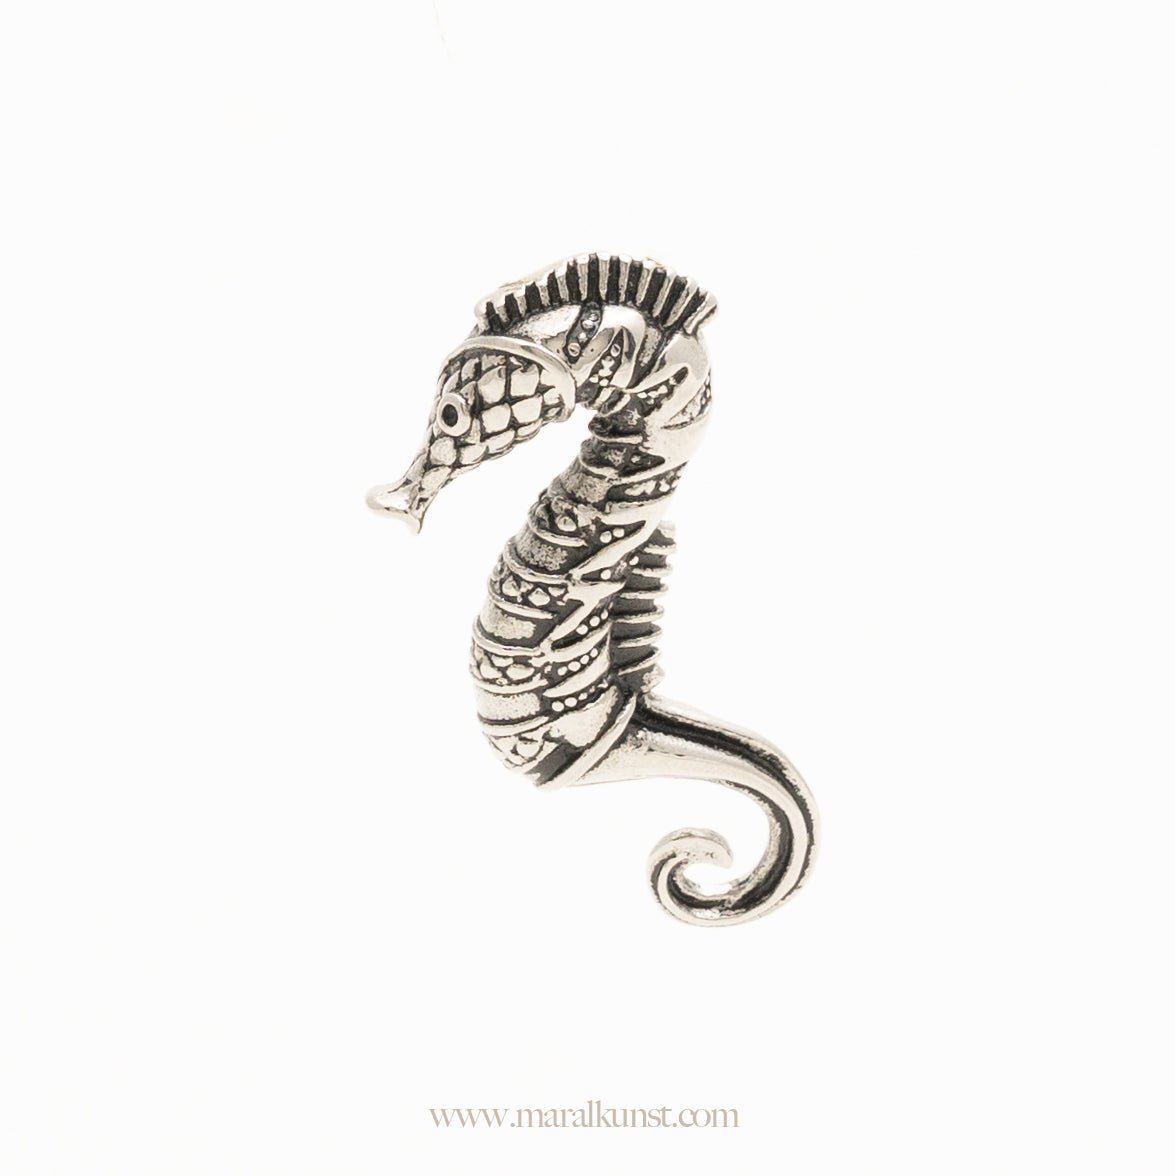 Seahorse Pendant - Maral Kunst Jewelry